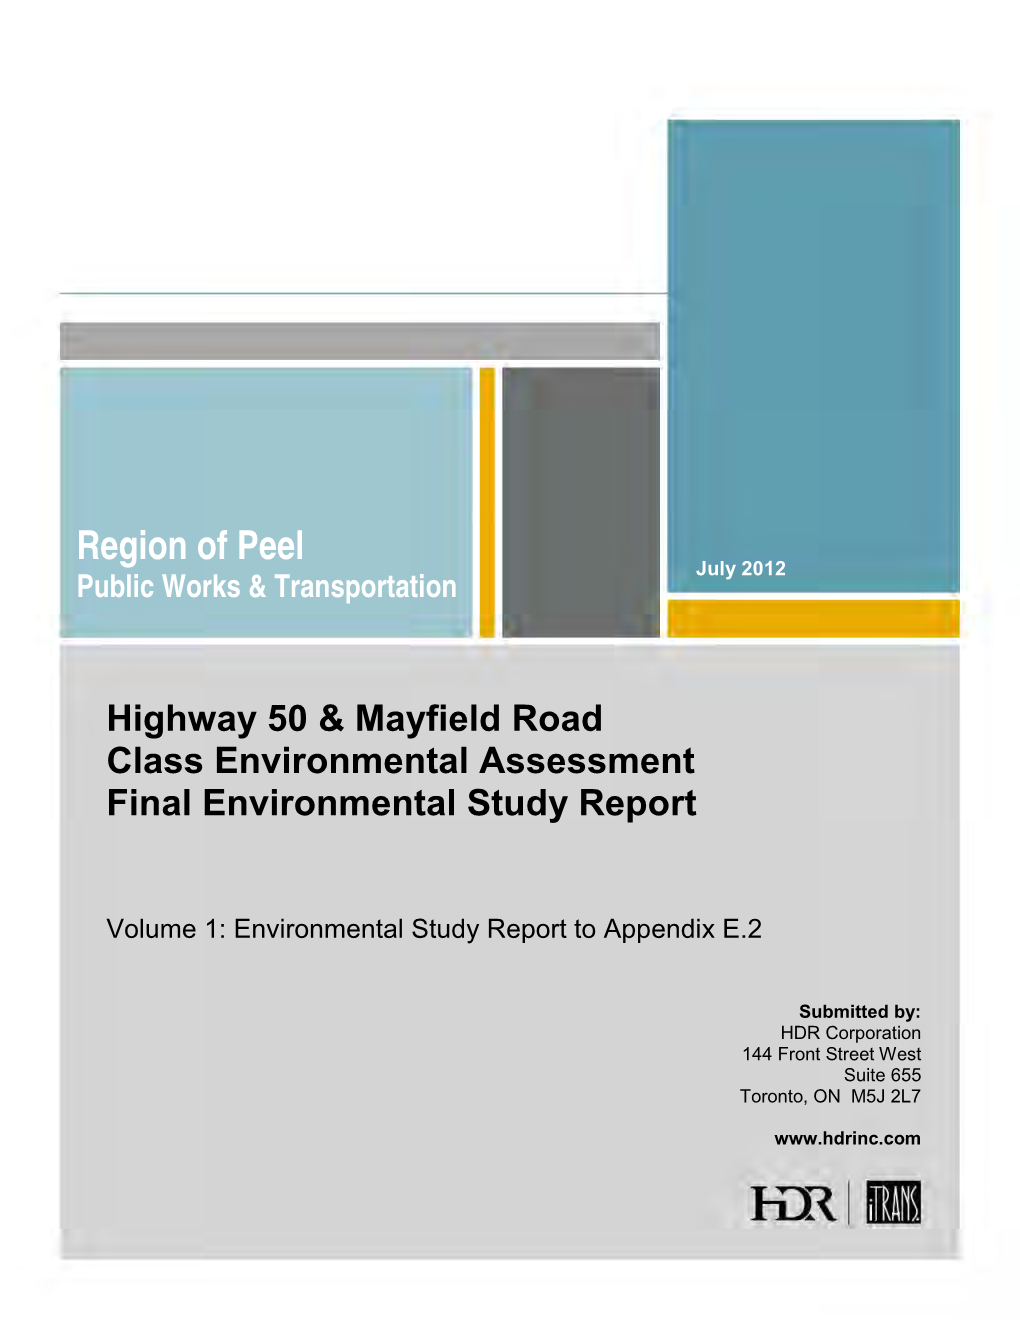 Environmental Study Report